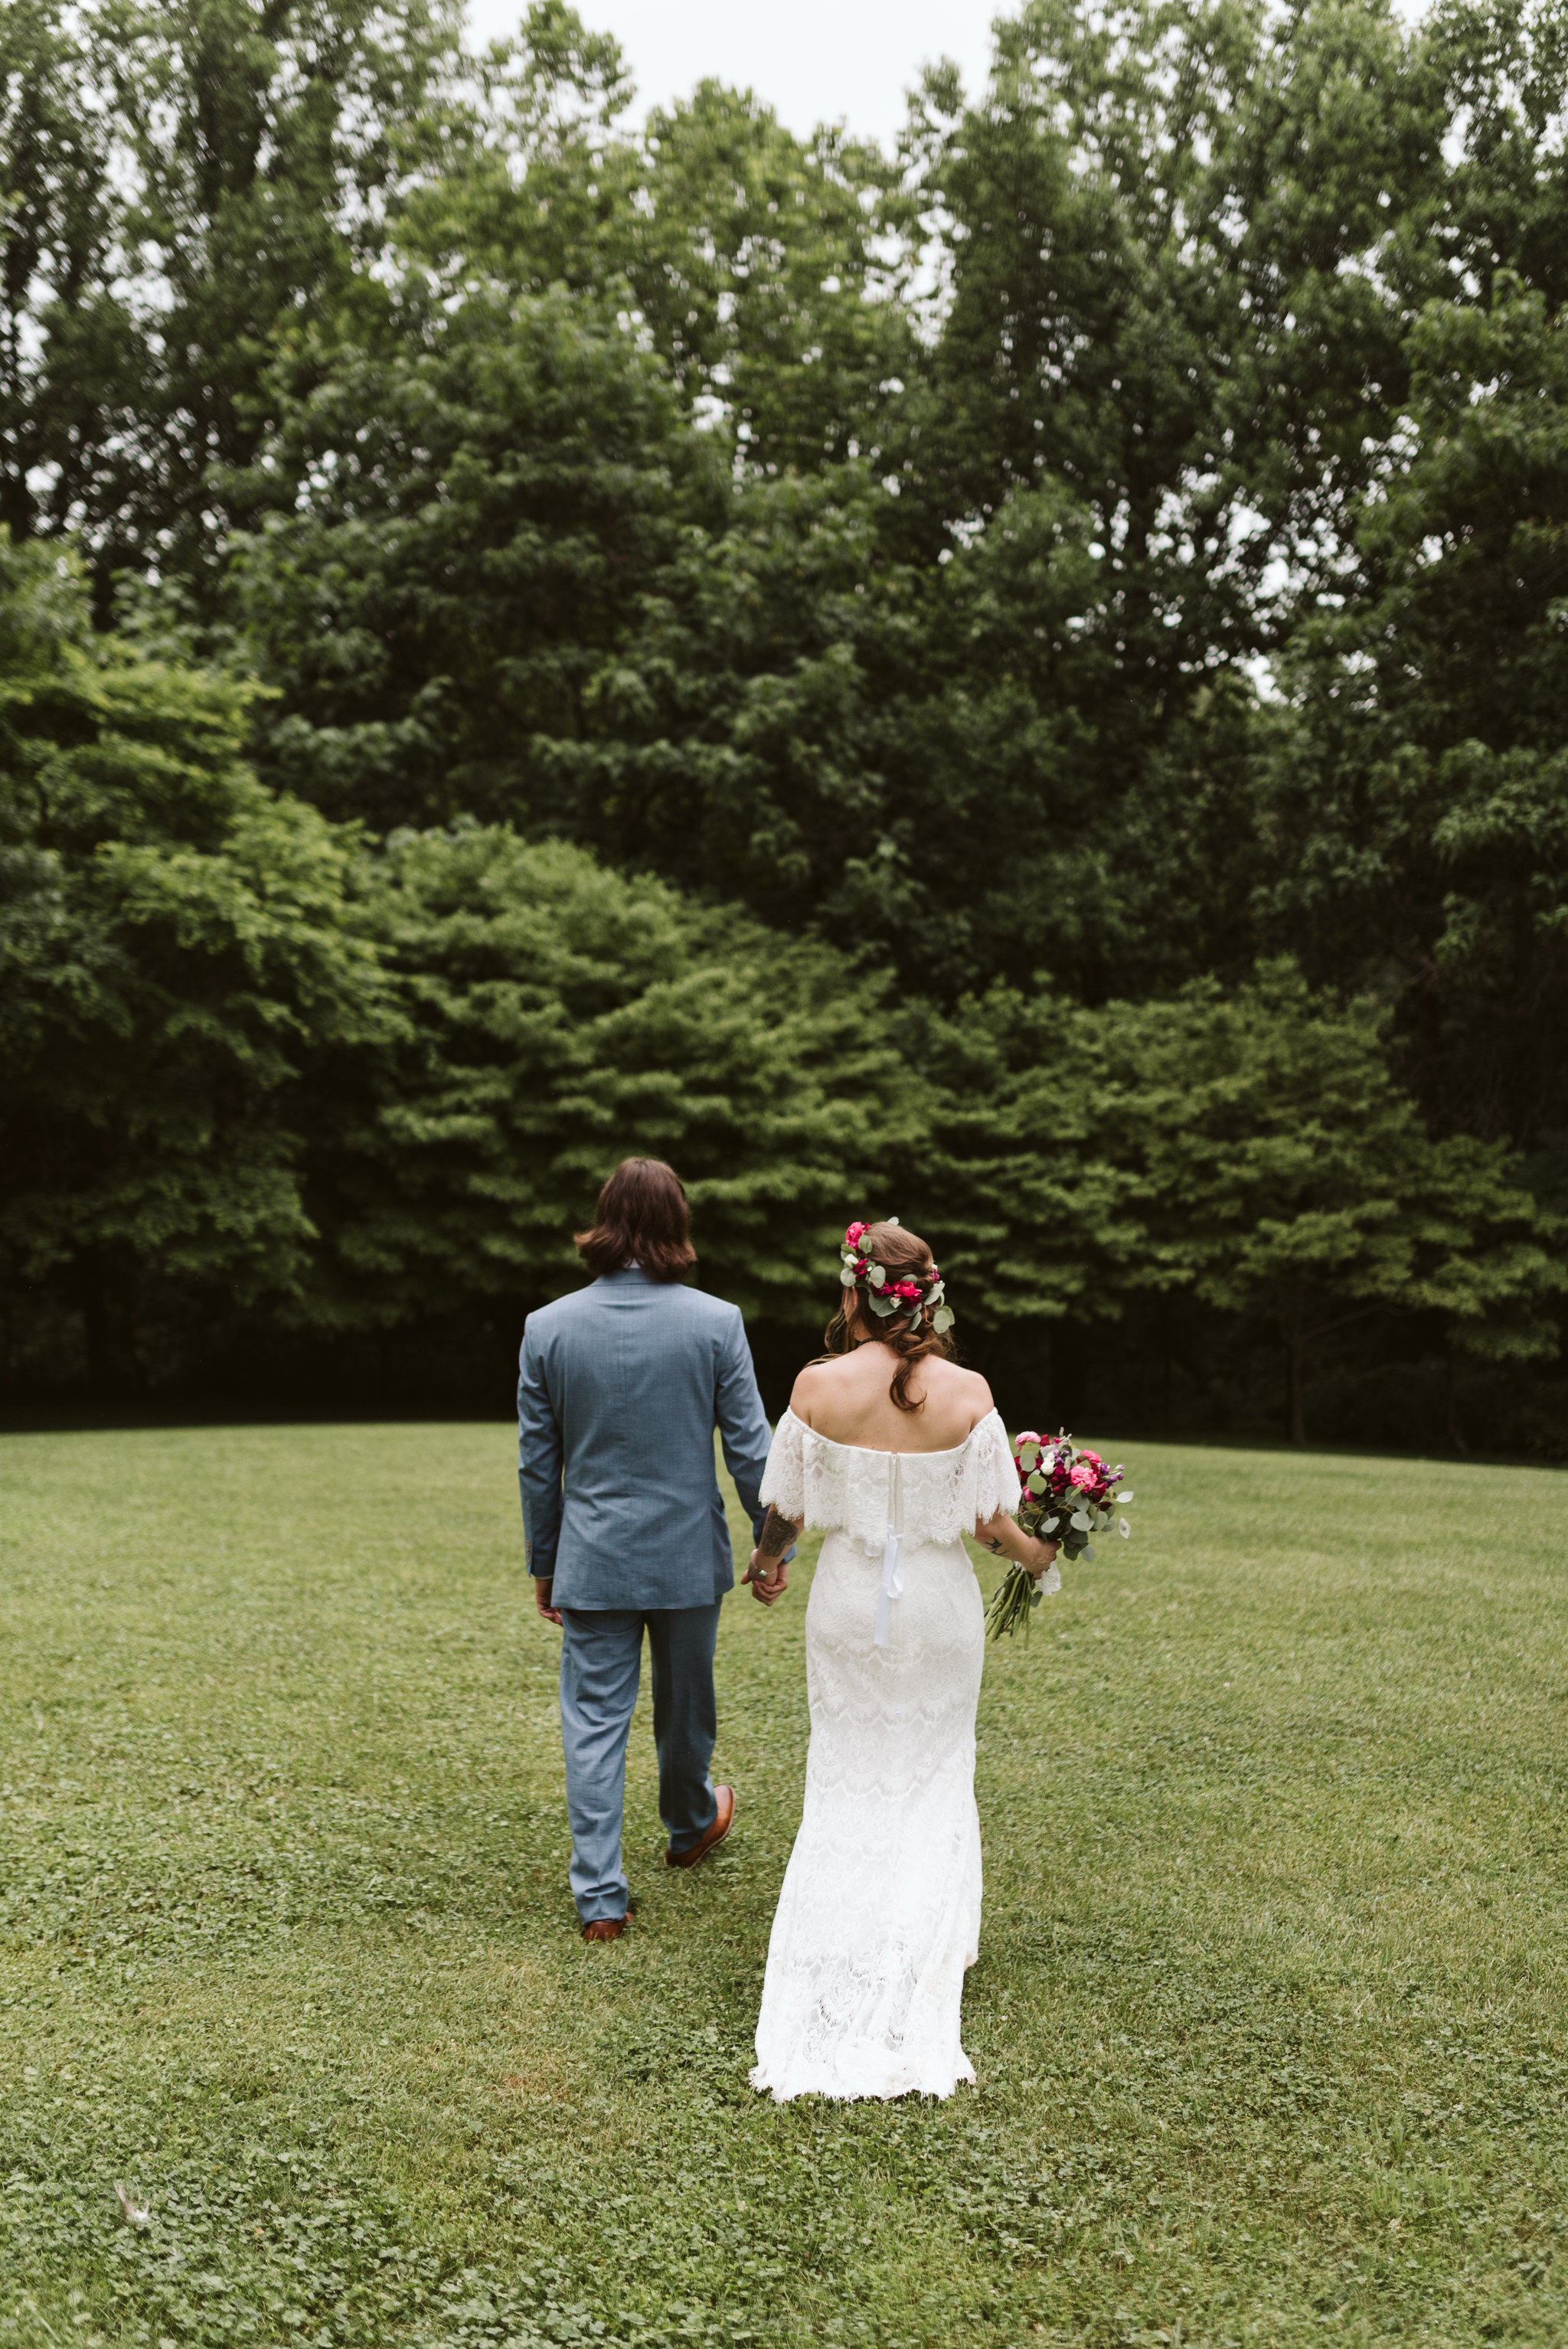  Annapolis, Quaker Wedding, Maryland Wedding Photographer, Intimate, Small Wedding, Vintage, DIY, Bride and Groom Walking Hand in Hand 